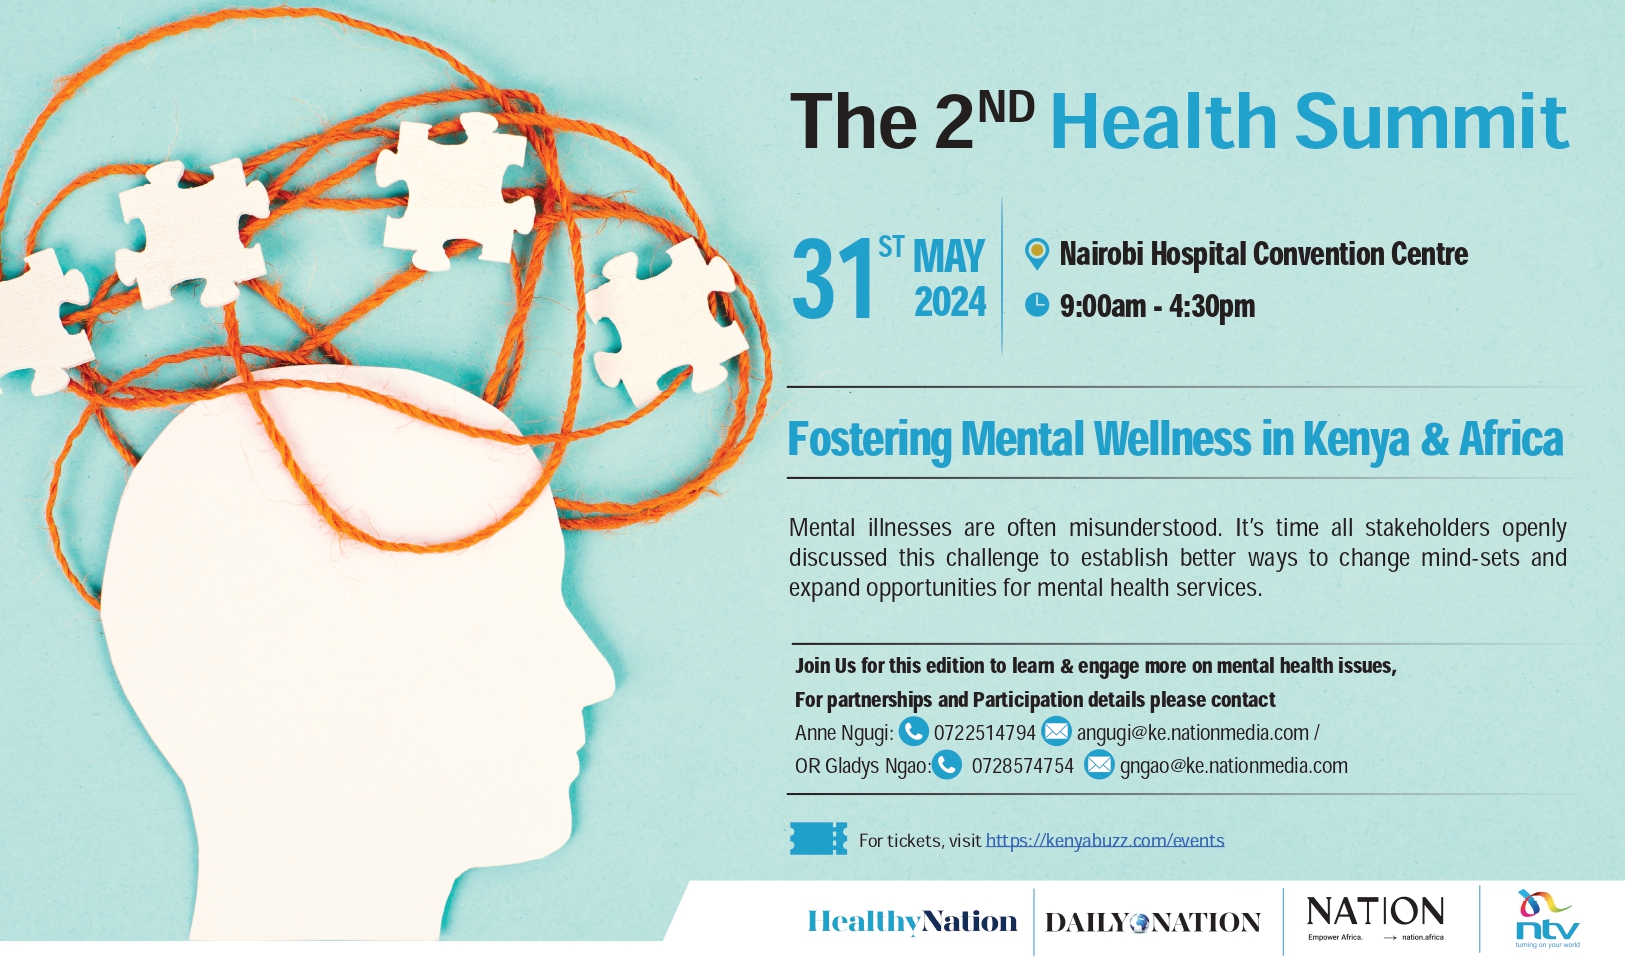 The 2nd Health Summit: Fostering Mental Wellness in Kenya & Africa